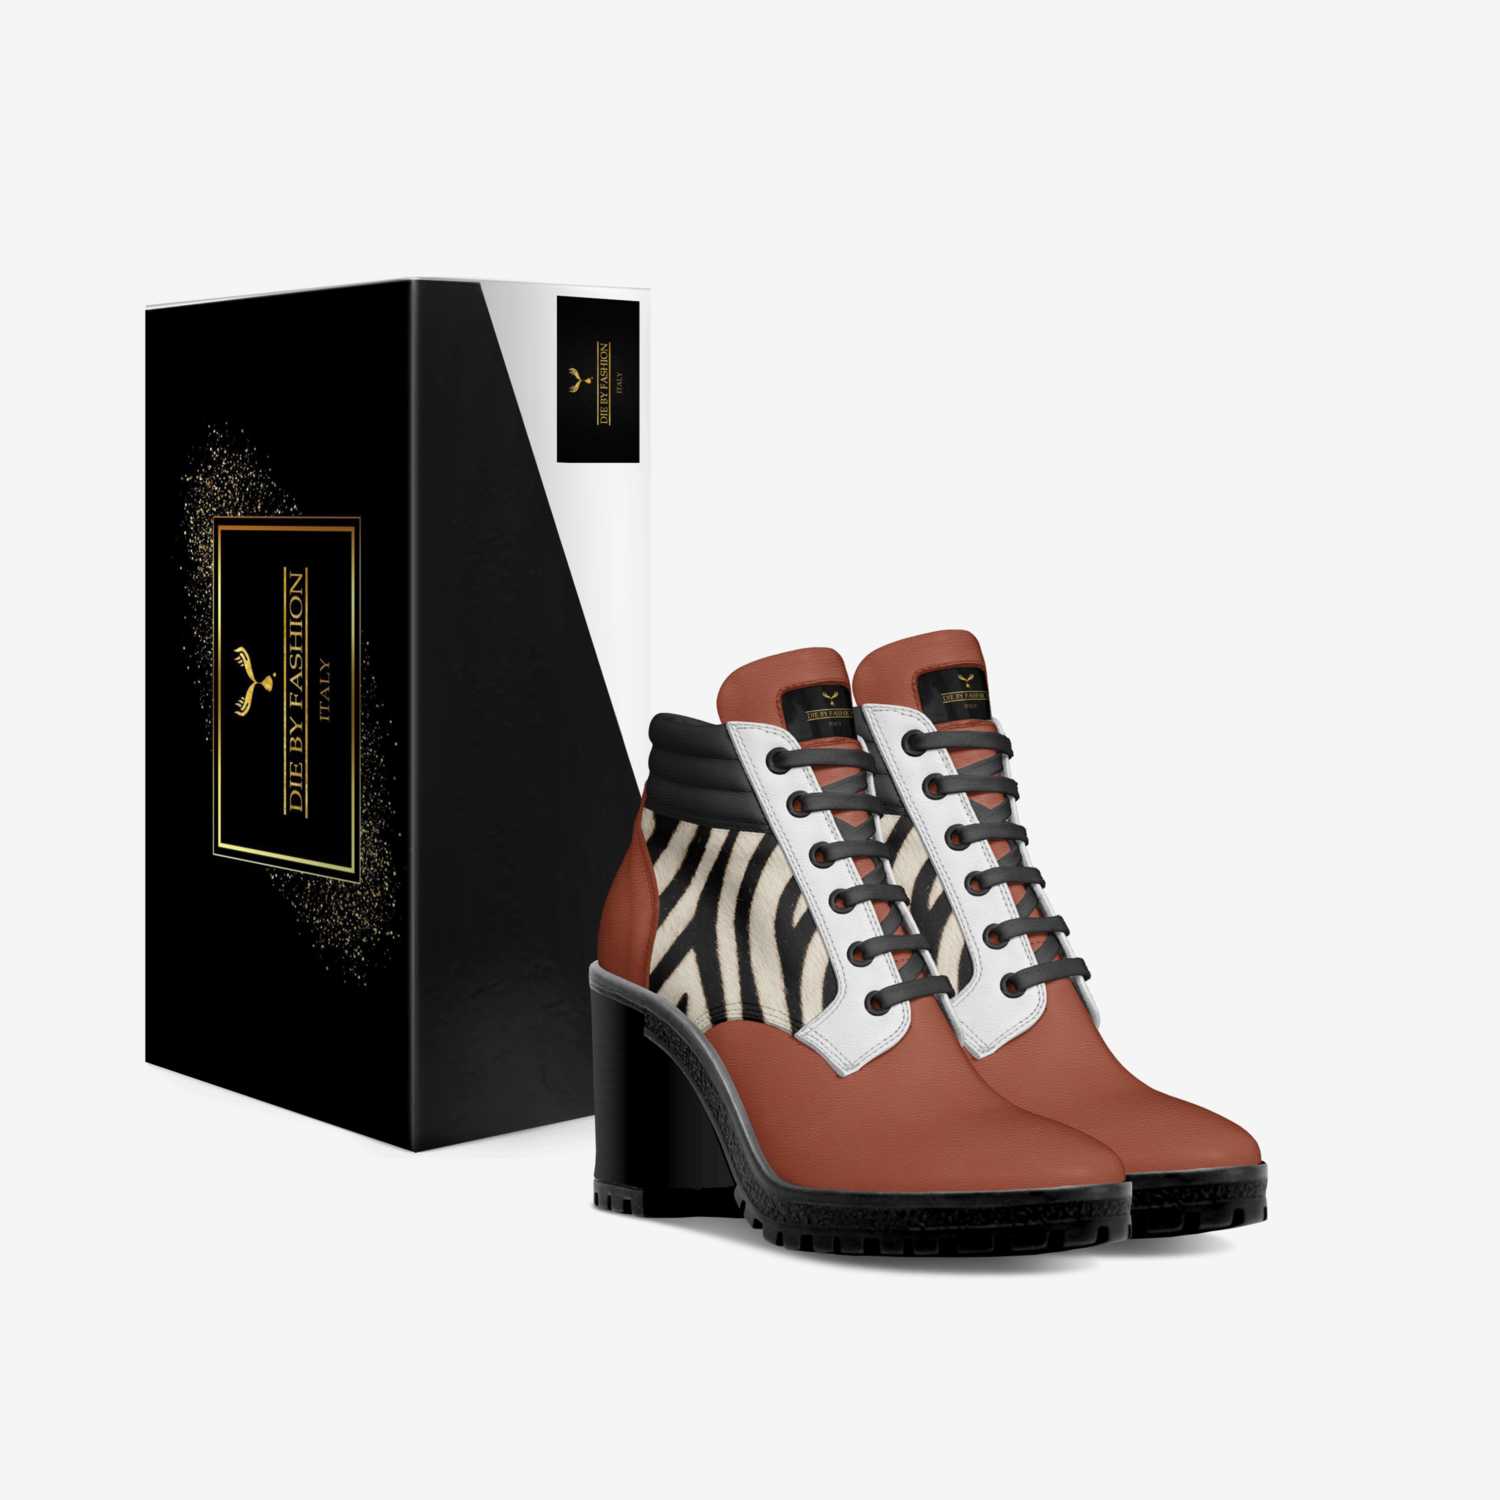 Street Crawlers custom made in Italy shoes by Rasheeda Socolove | Box view